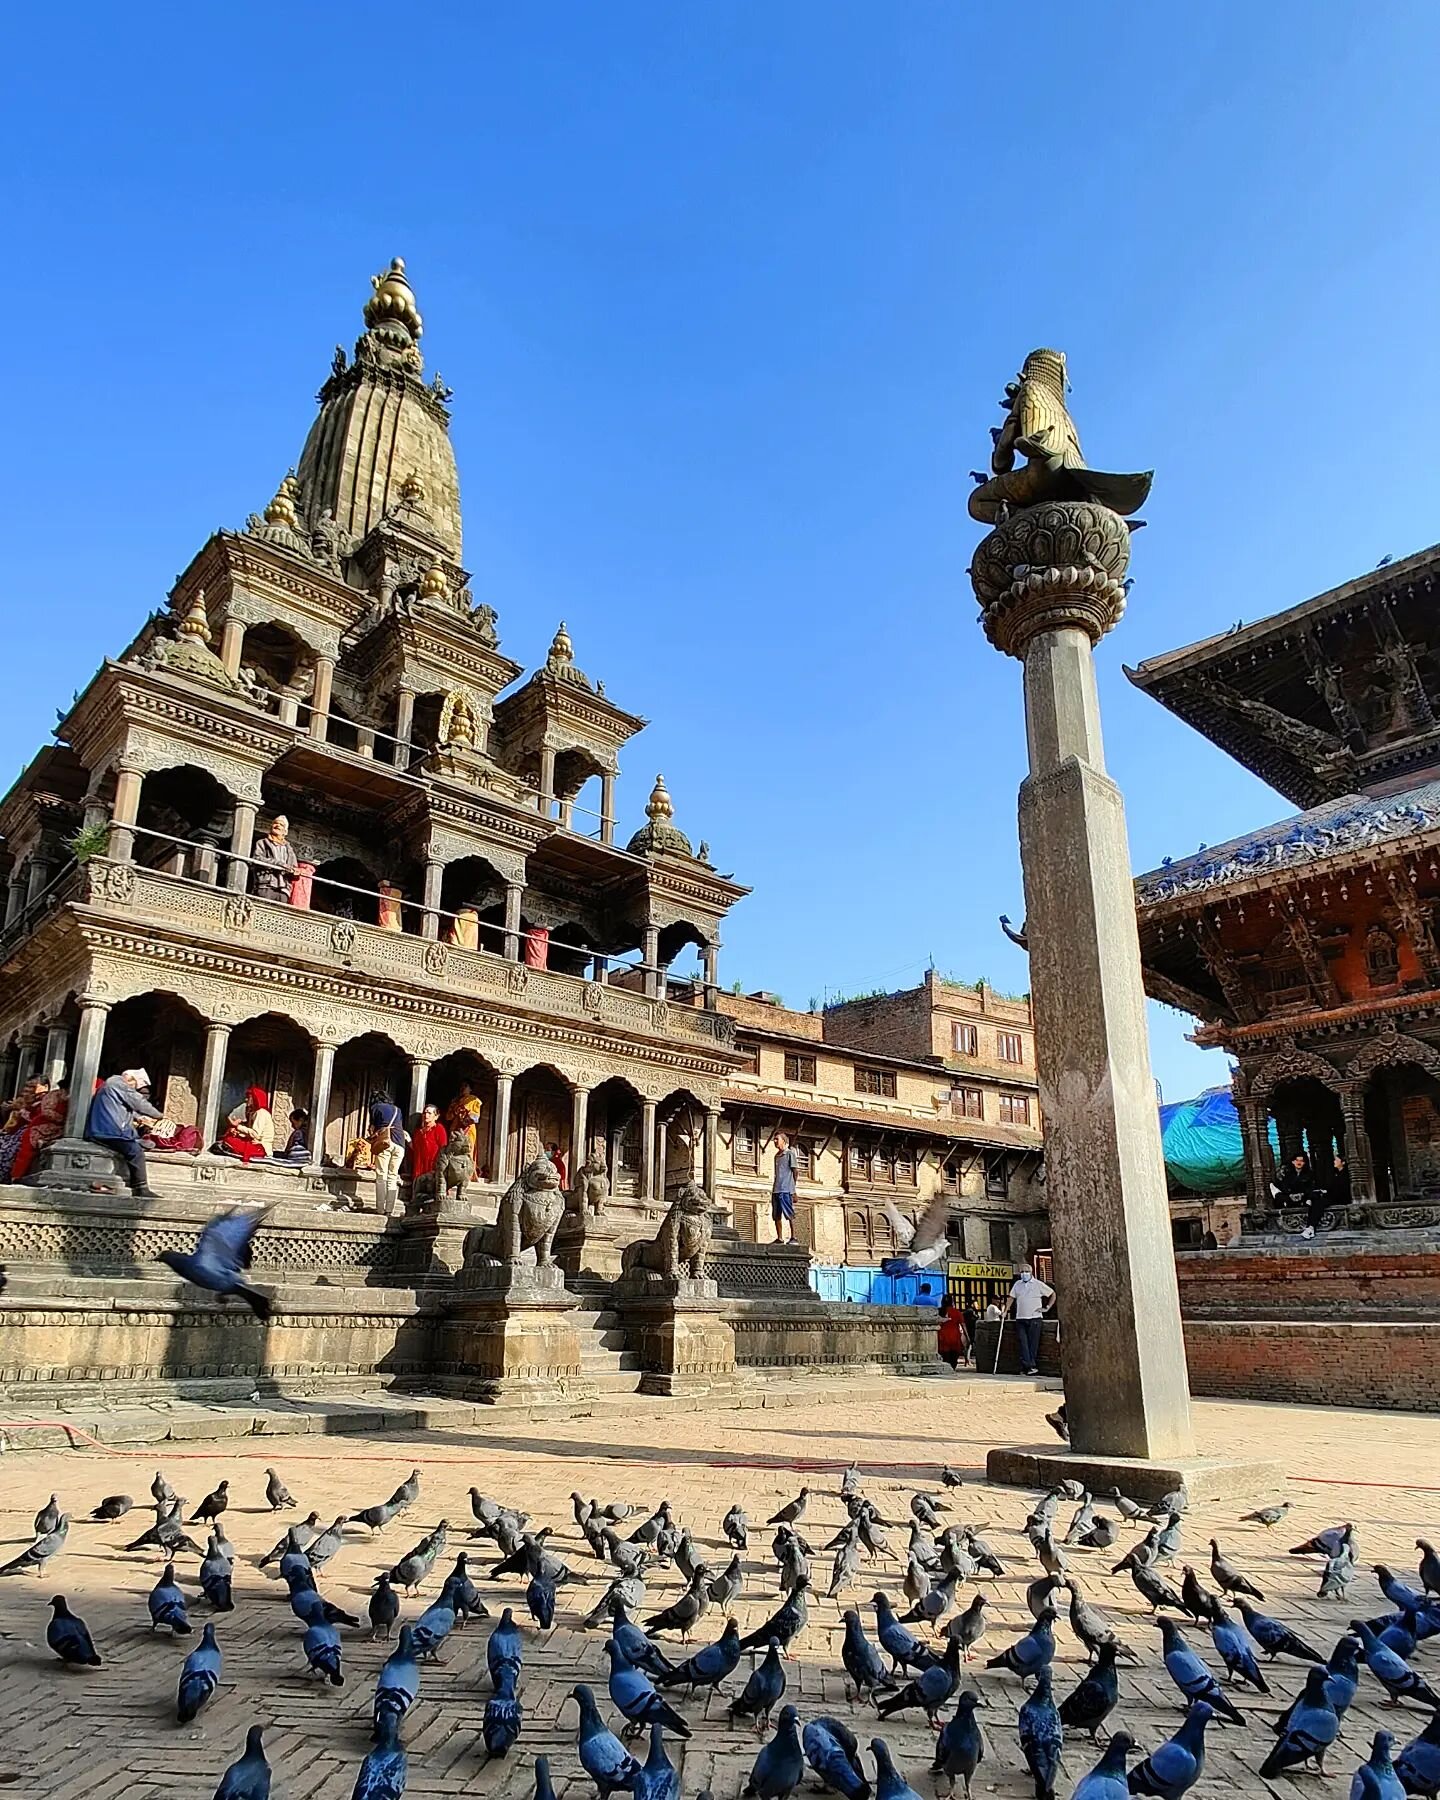 The monsoon season in Katmandu Valley is not that bad ! 😊☀️ - Have a great Friday friends.
-----
#visitnepal #nepalnow #nepaltravel #nepal #patan #patandurbarsquare #kathmandu #lalitpur #instatravel #instanepal #temple #airbnbsuperhost #airbnbnepal 